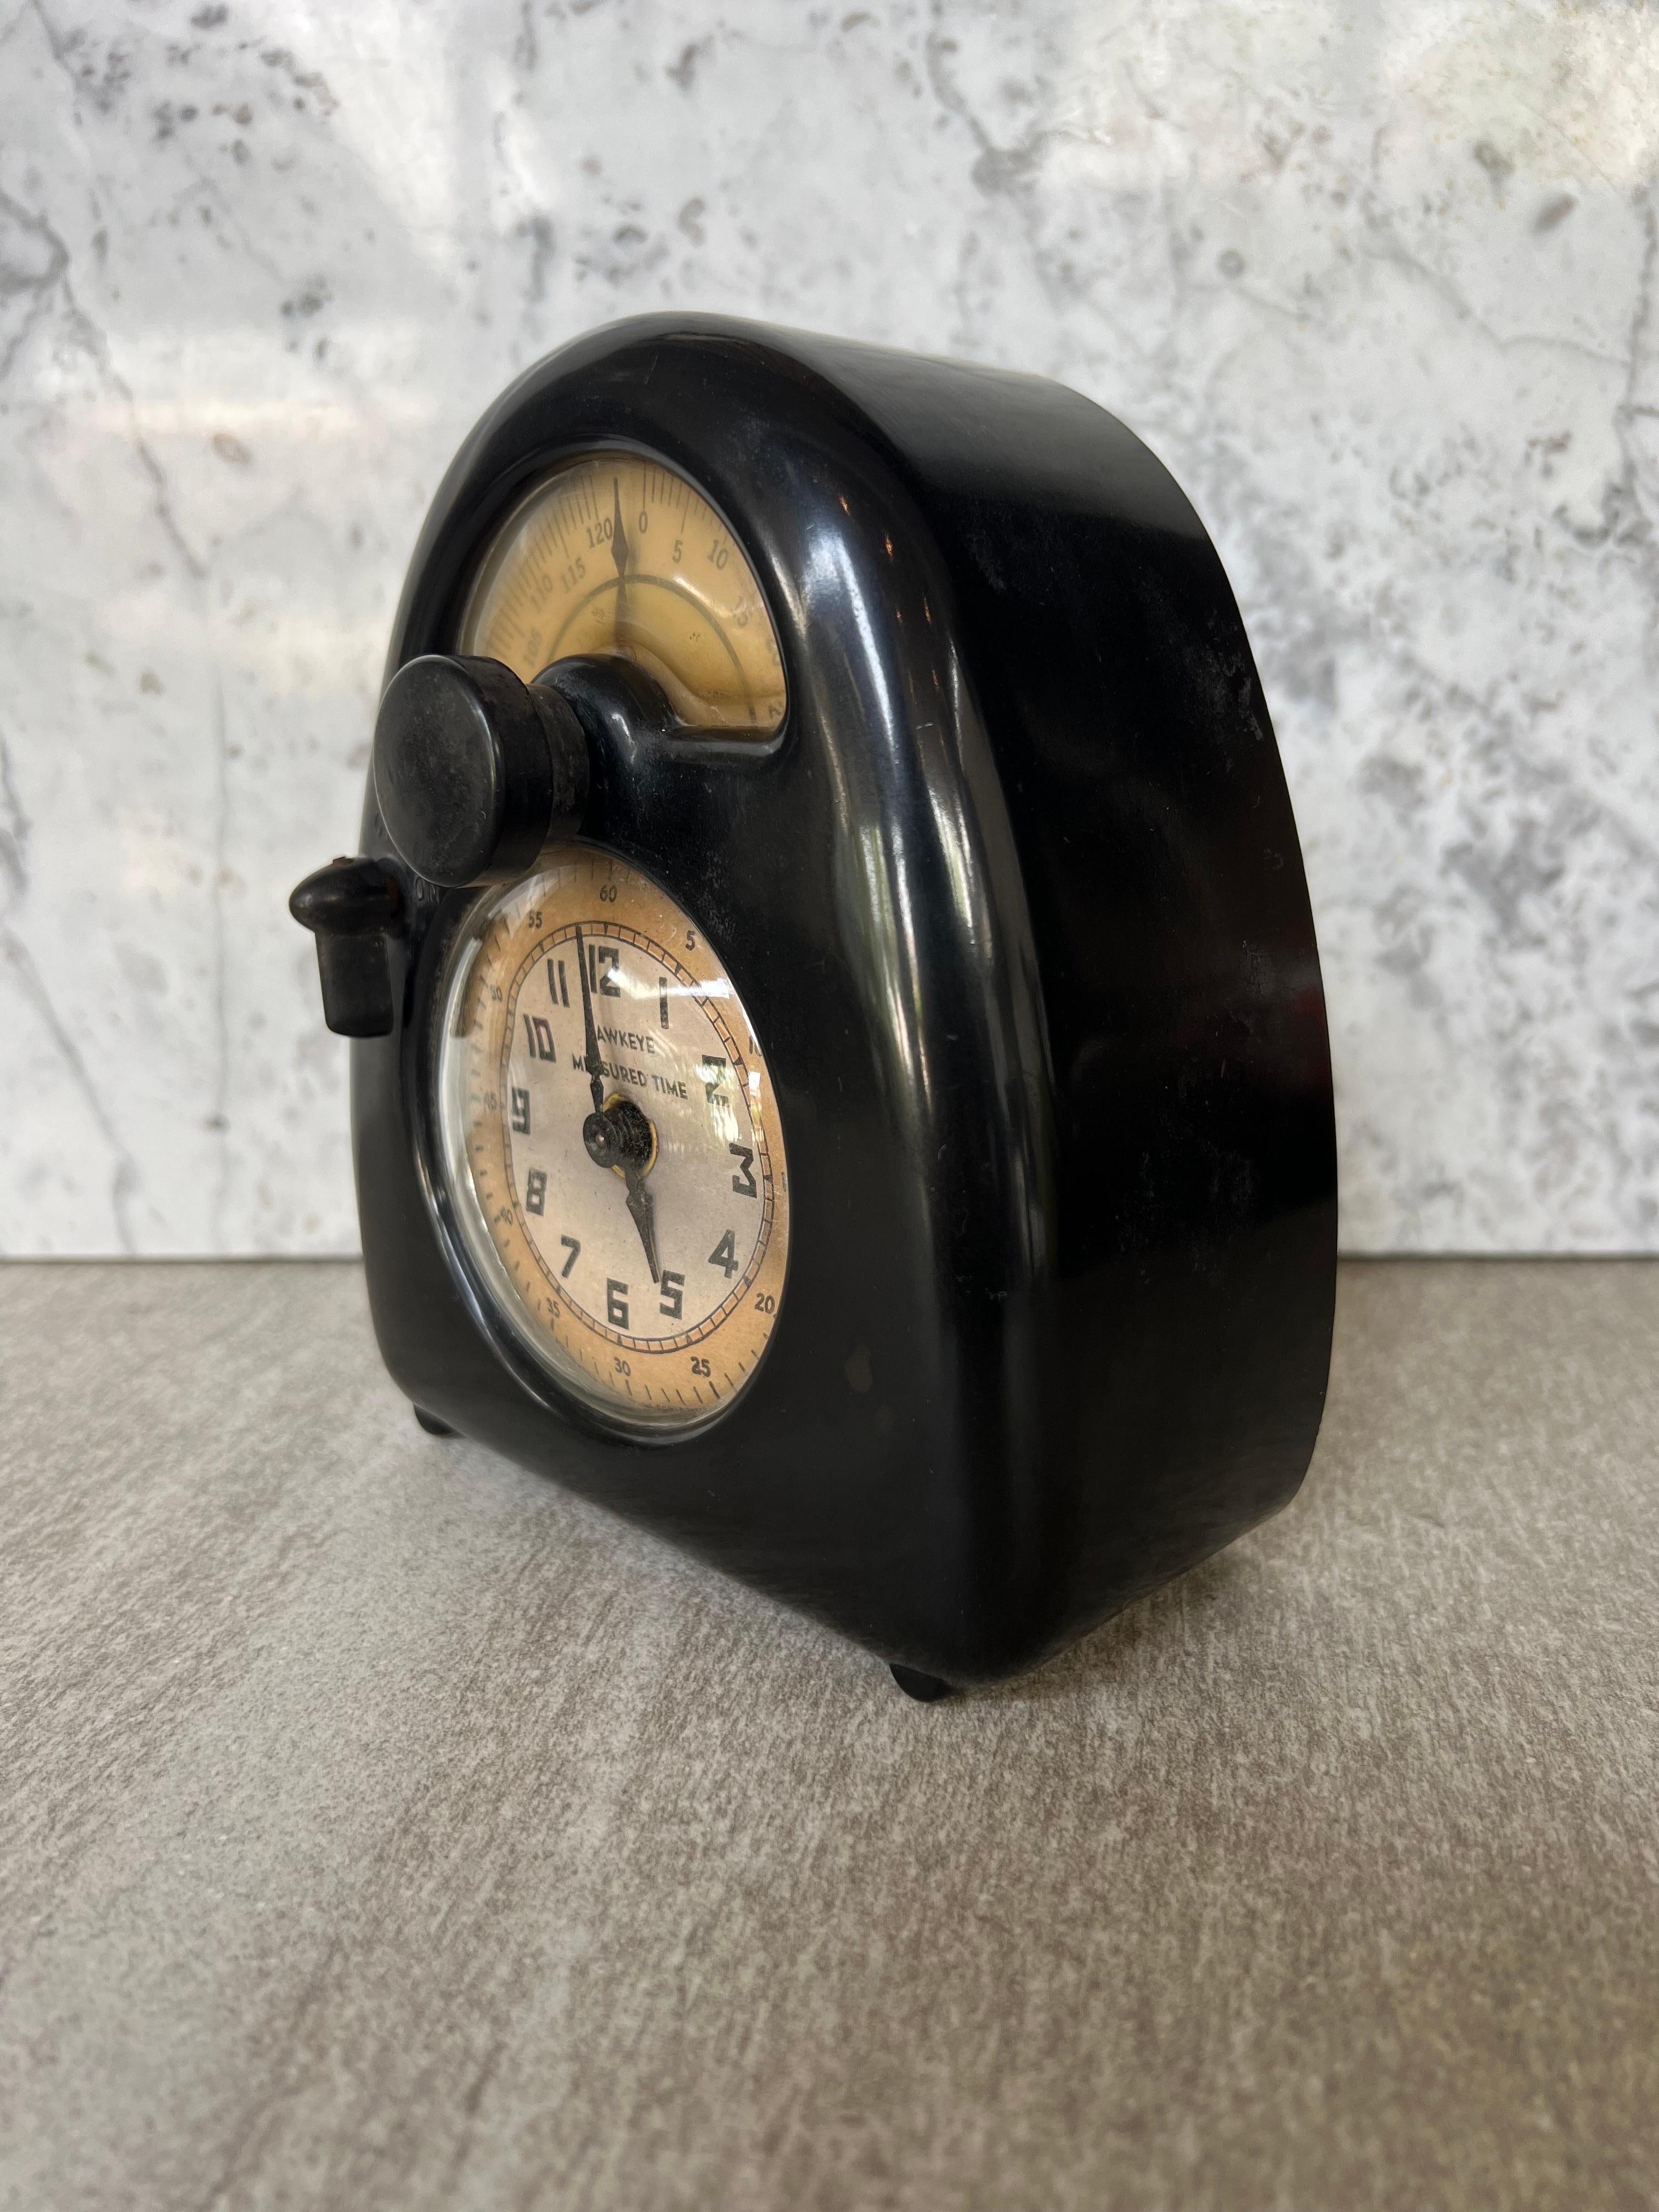 Art nouveau Horloge et horloge de cuisine « Measured Time » d'Isamu Noguchi Hawkeye en vente